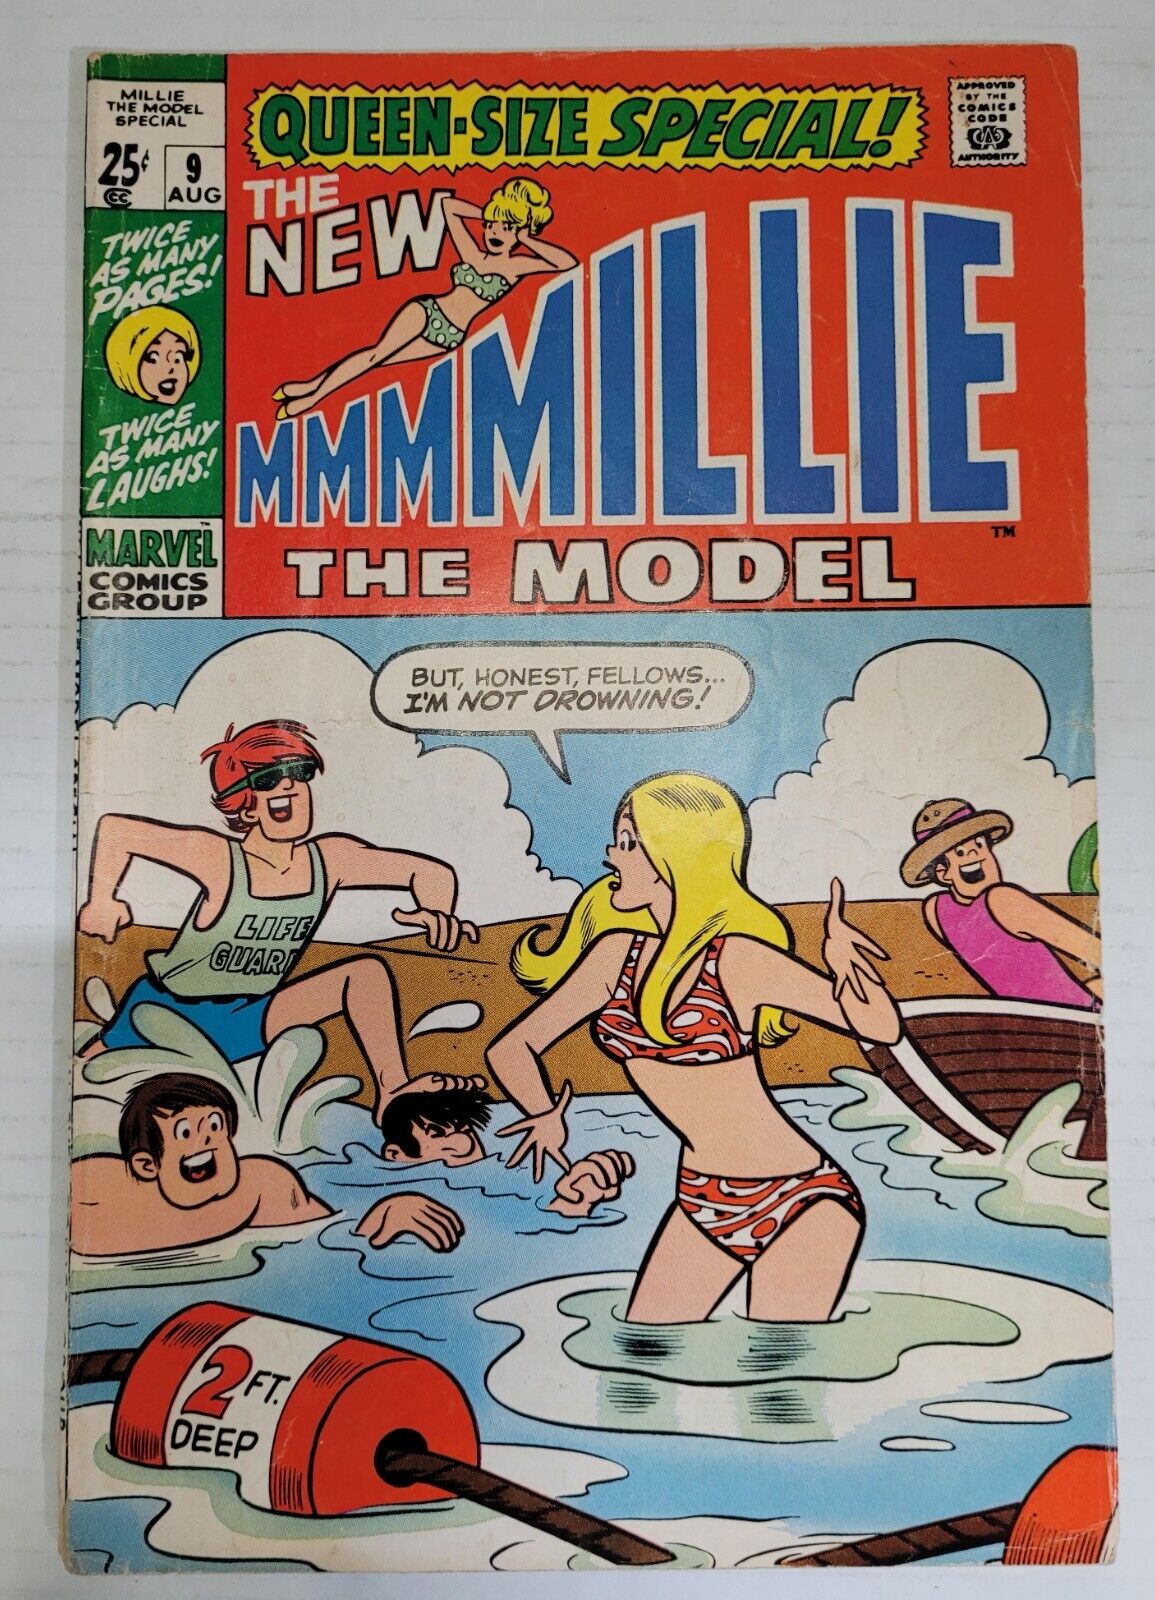 MILLIE THE MODEL Vol 1 #9 August 1970 - MARVEL COMICS - BRONZE AGE